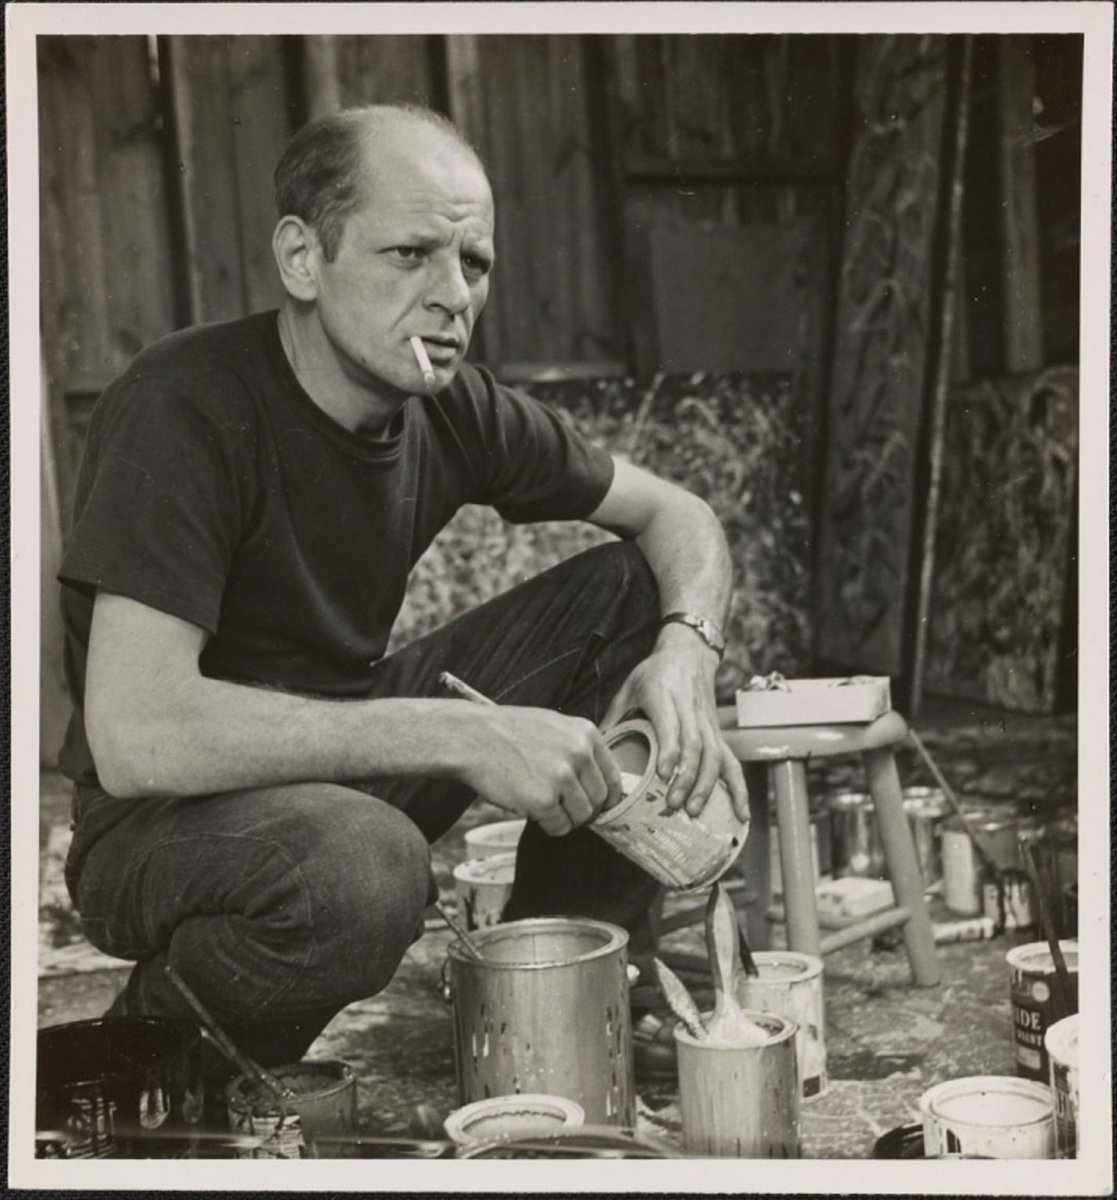 Jackson Pollock by Rudy Burckhardt, 1950 @smithsonian  @ArchivesAmerArt